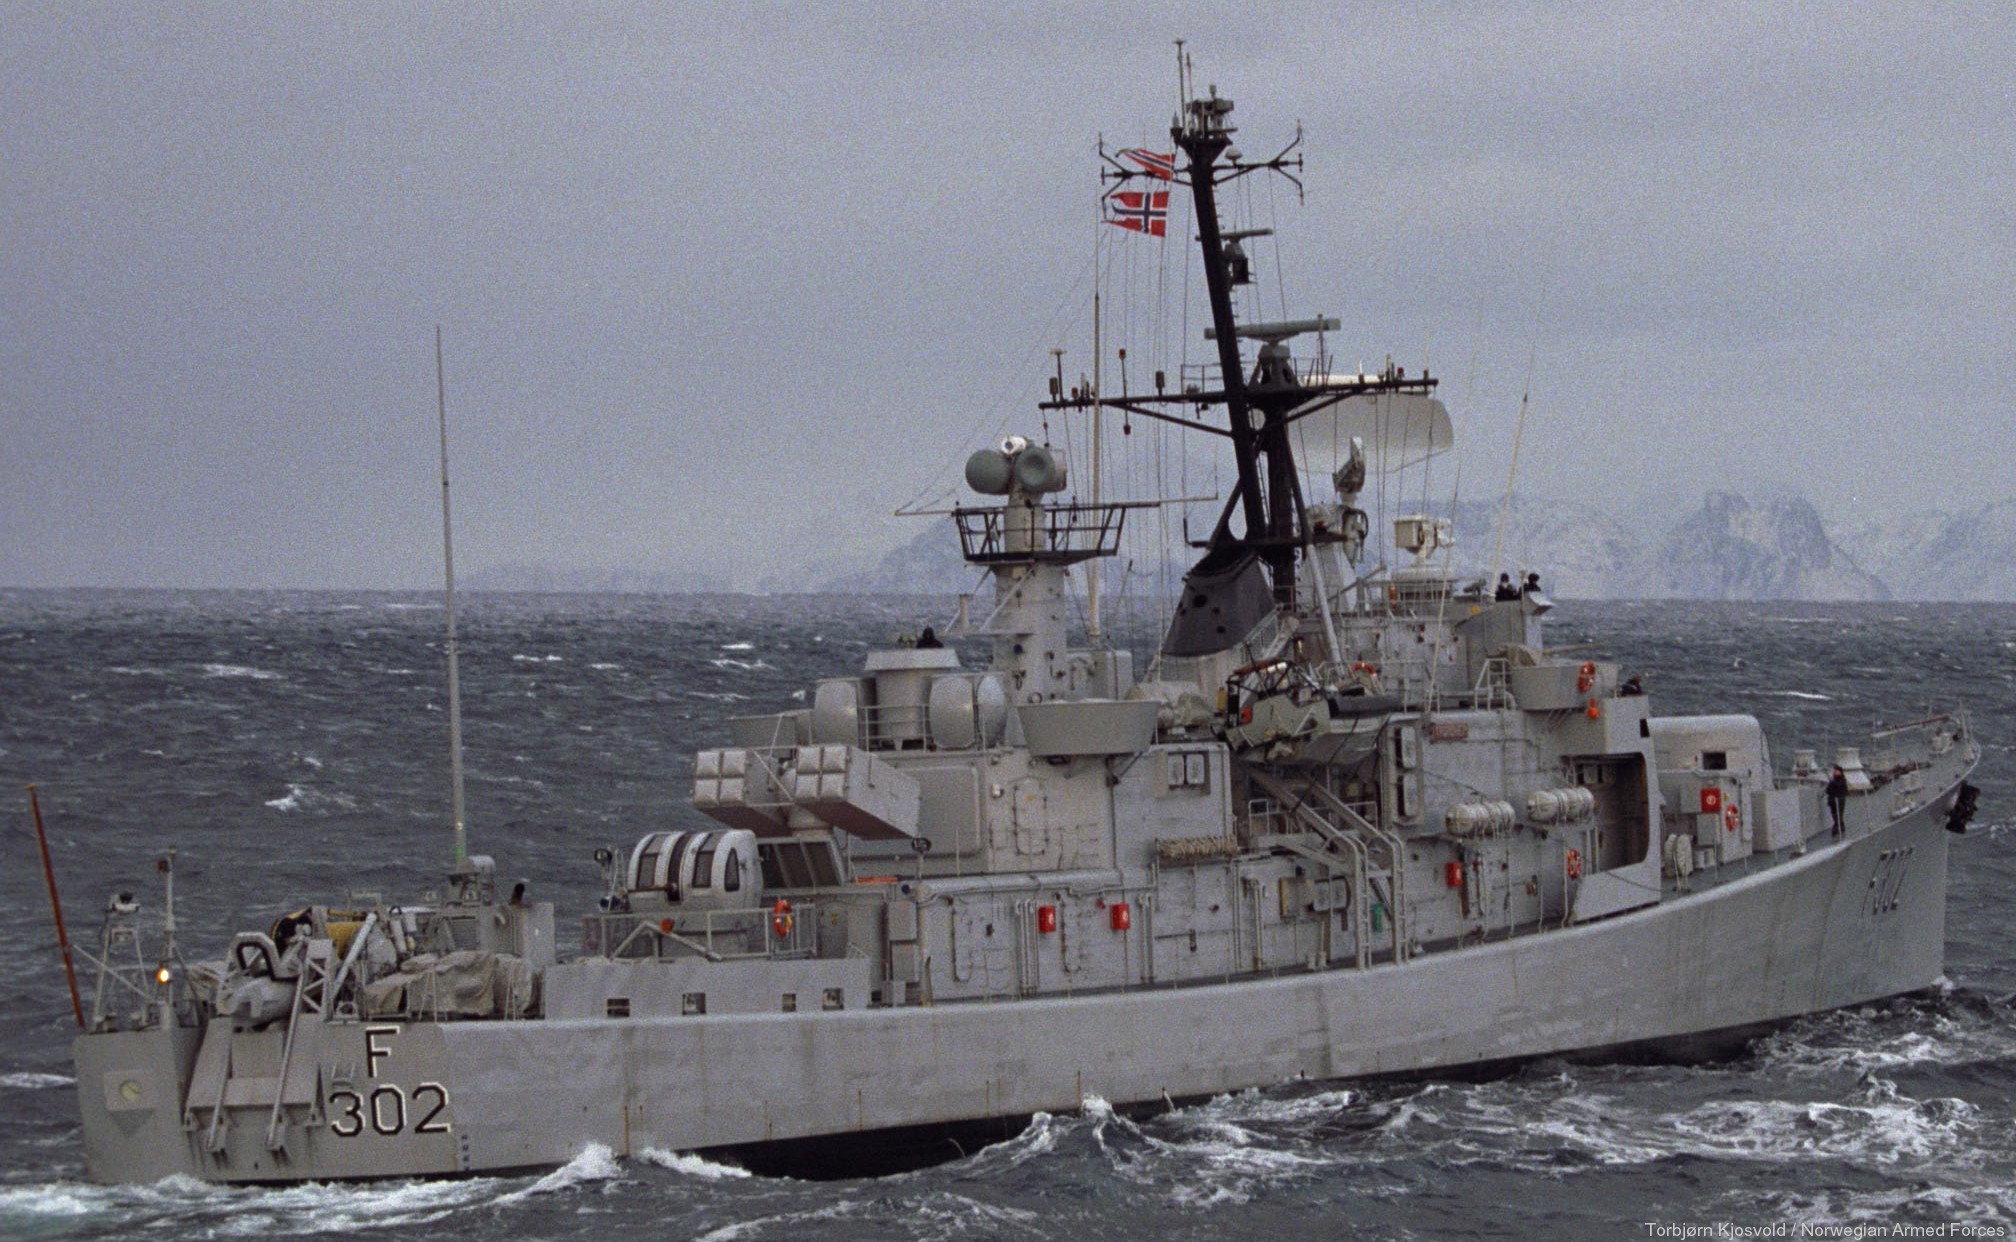 f-302 hnoms knm trondheim oslo class frigate royal norwegian navy sjoforsvaret 03c